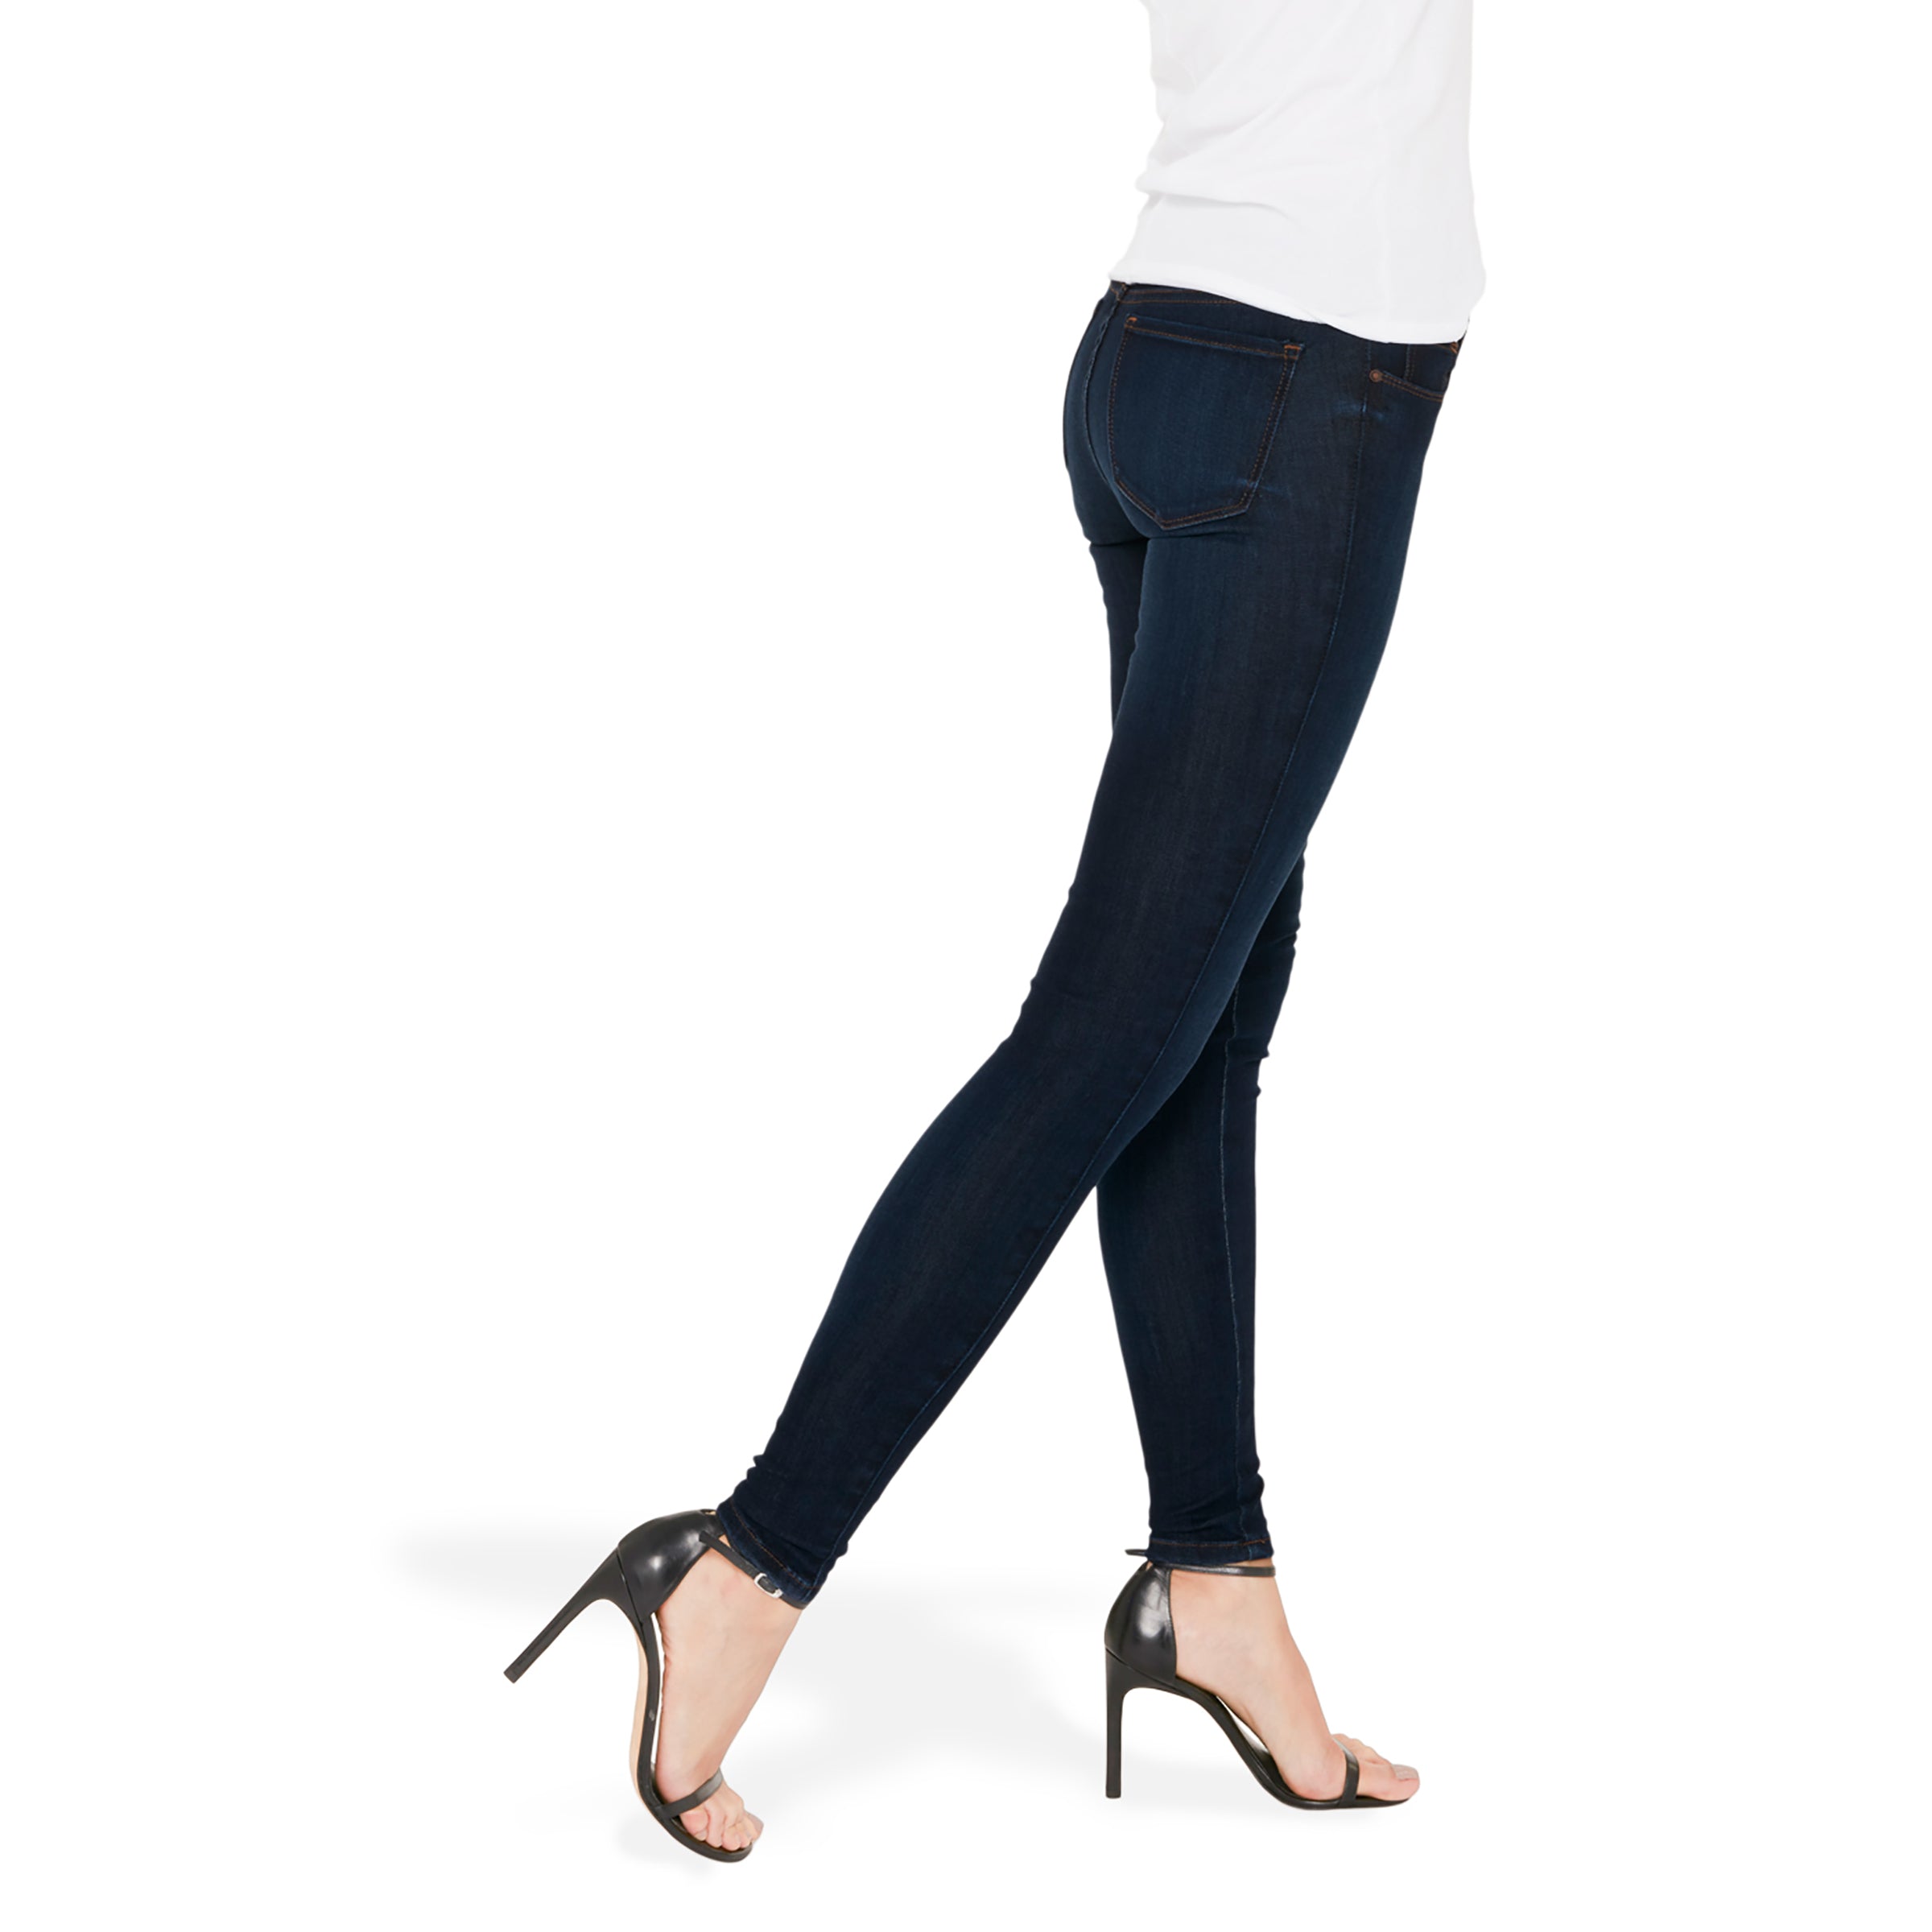 Women wearing Azul oscuro/medio desteñido Mid Rise Skinny Jane Jeans